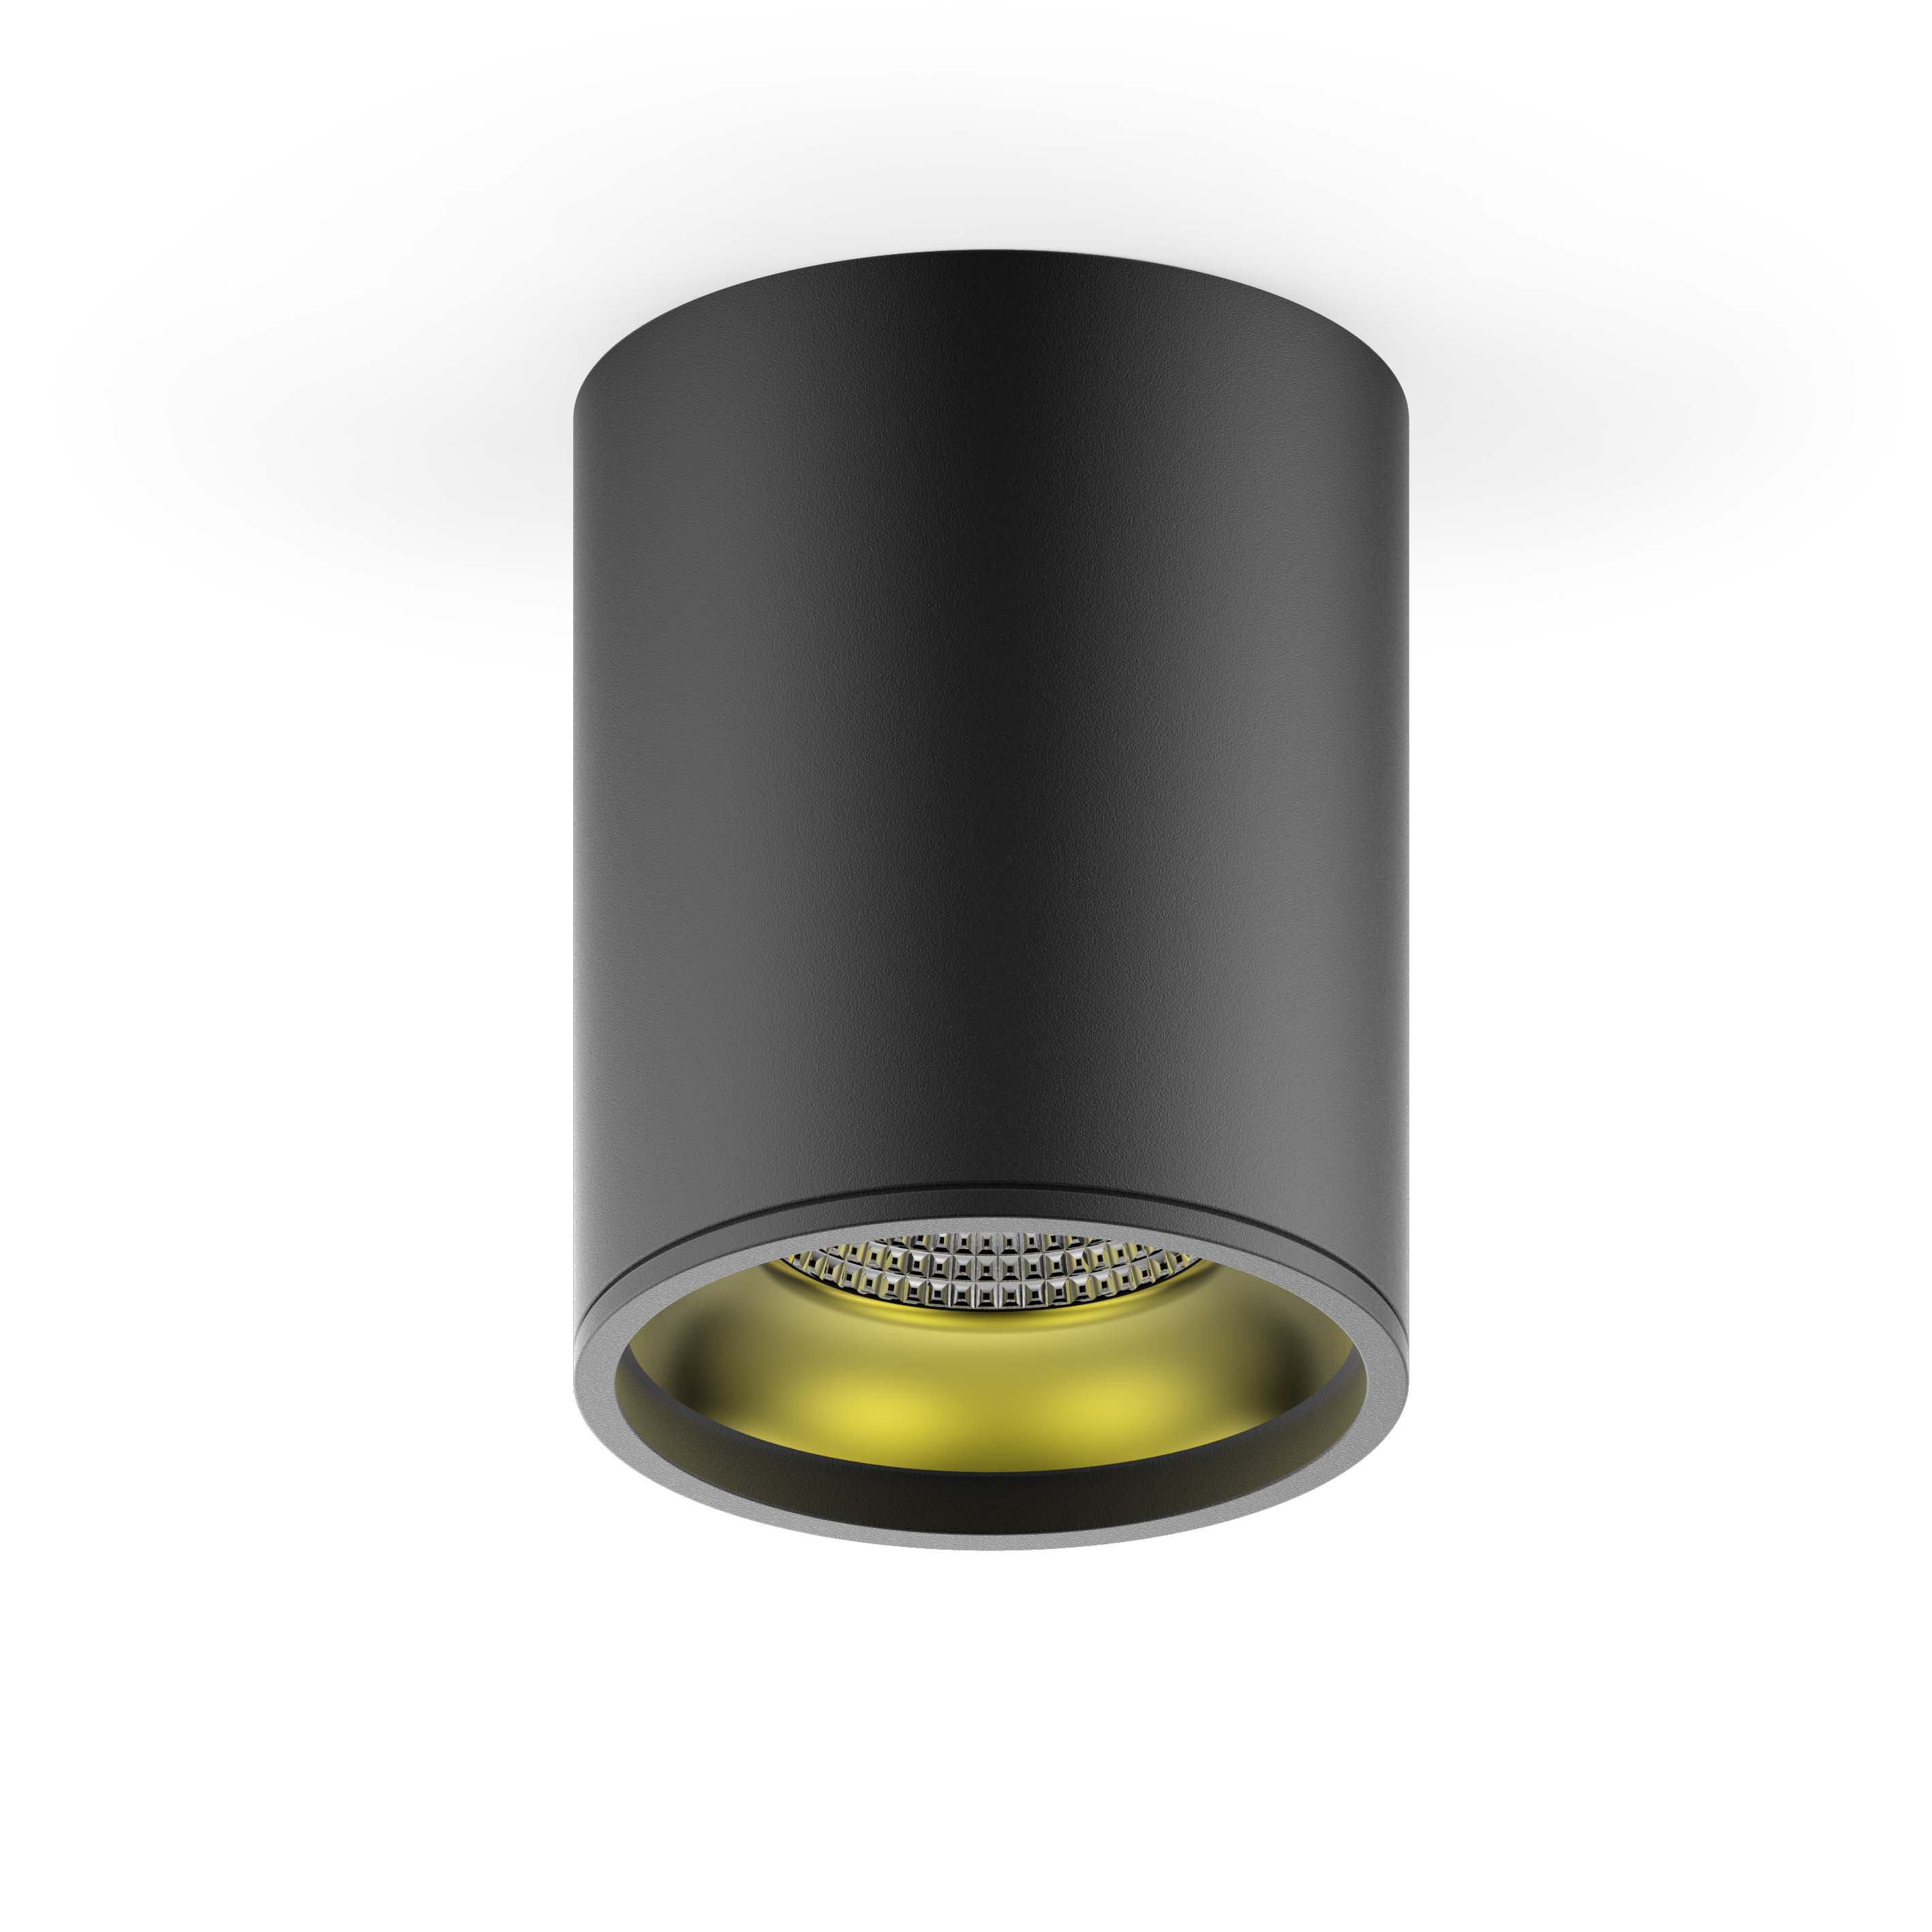 LED светильник накладной HD008 12W (черный золото) 3000K 79x100,900лм, 1/10 светильник futuro 36вт led 3000k 2160лм цвет золото